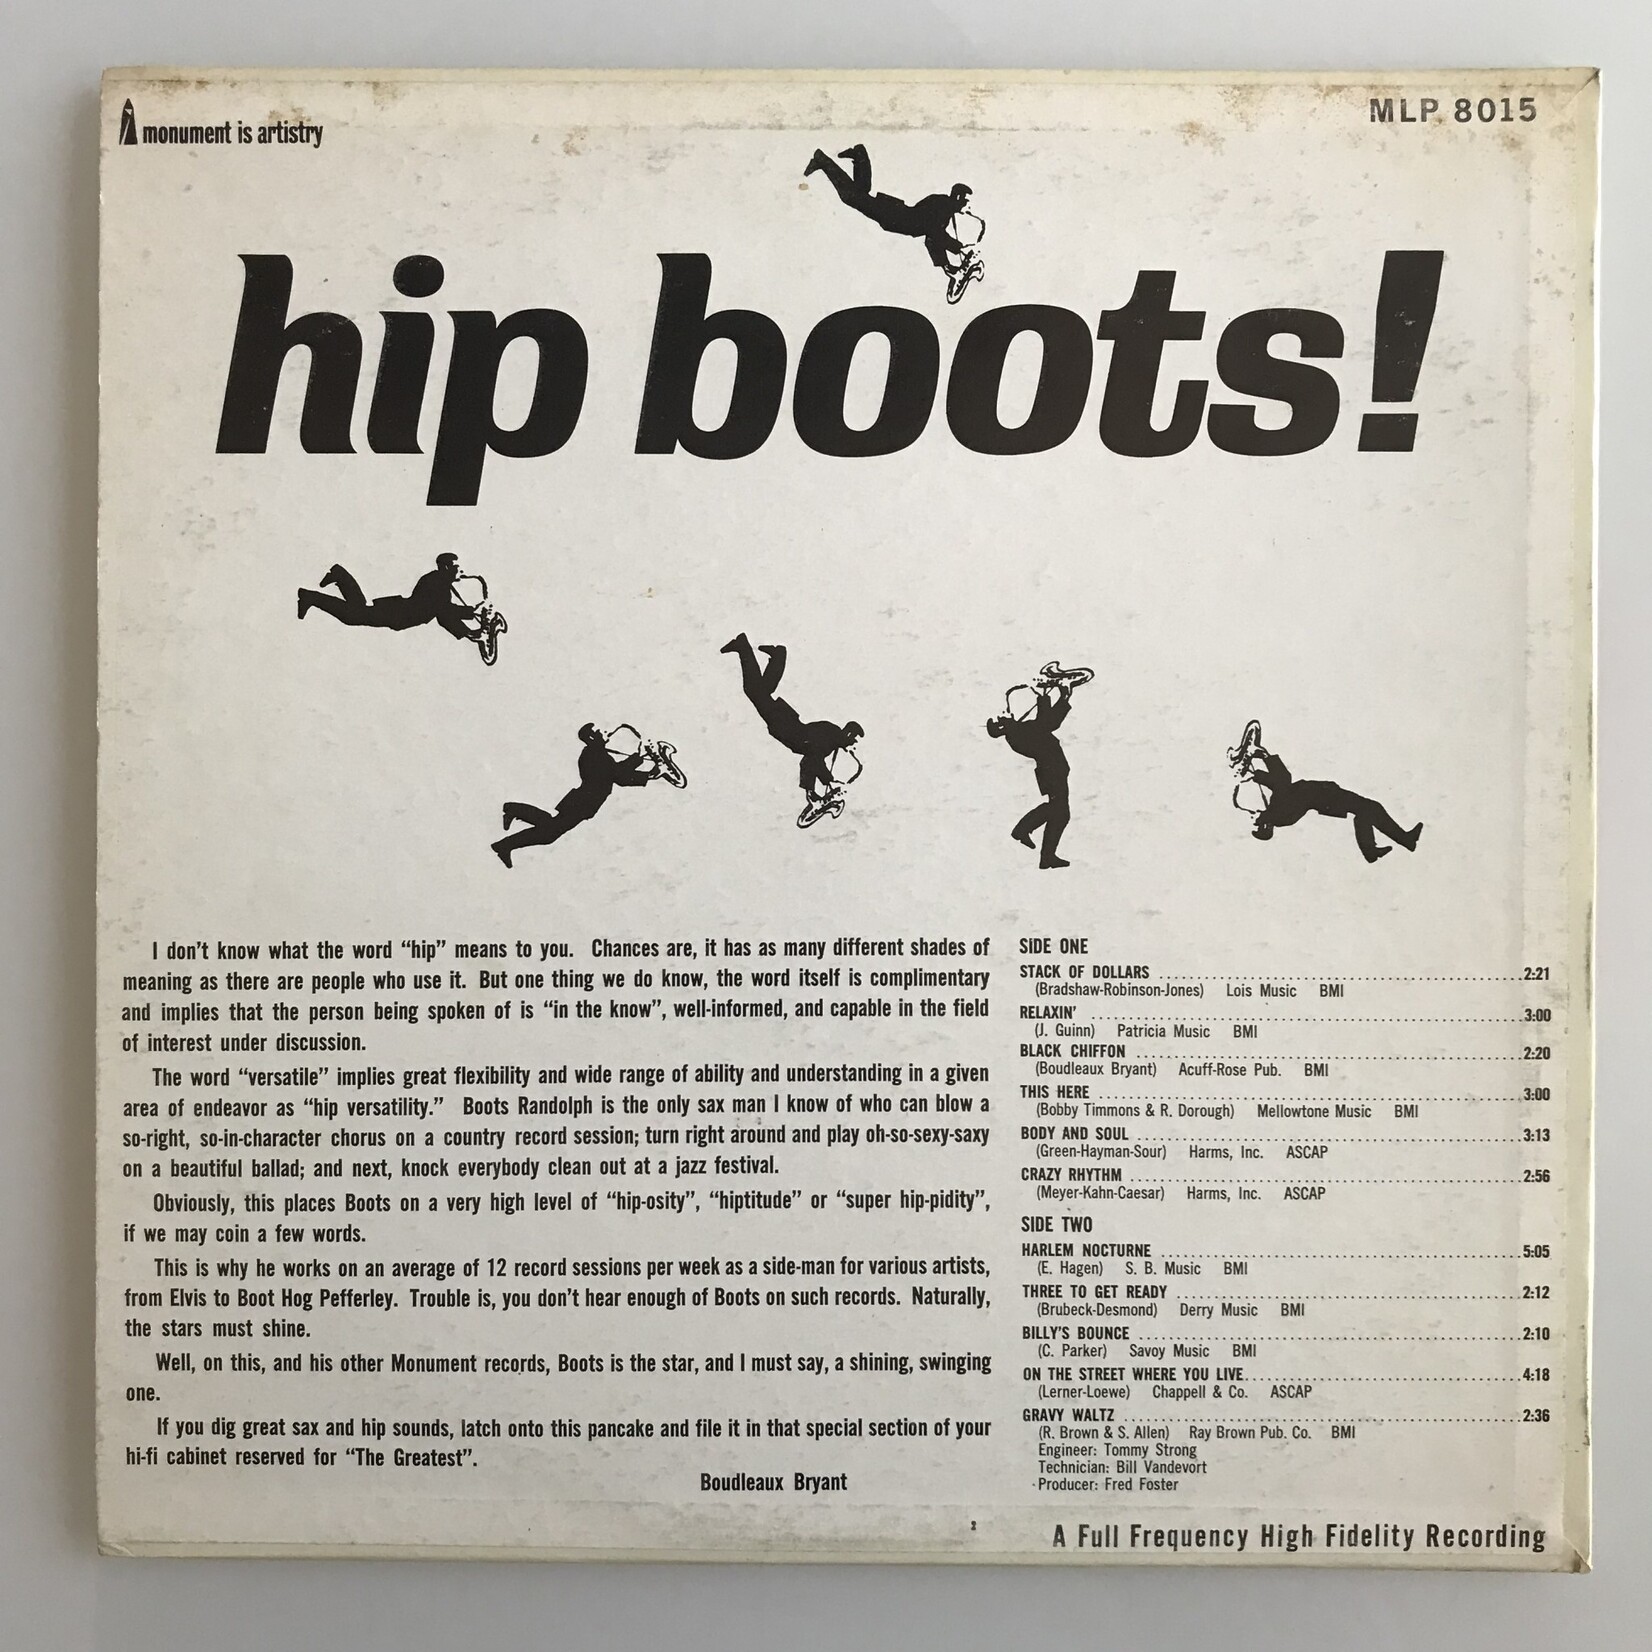 Boots Randolph - Hip Boots! - Vinyl LP (USED)